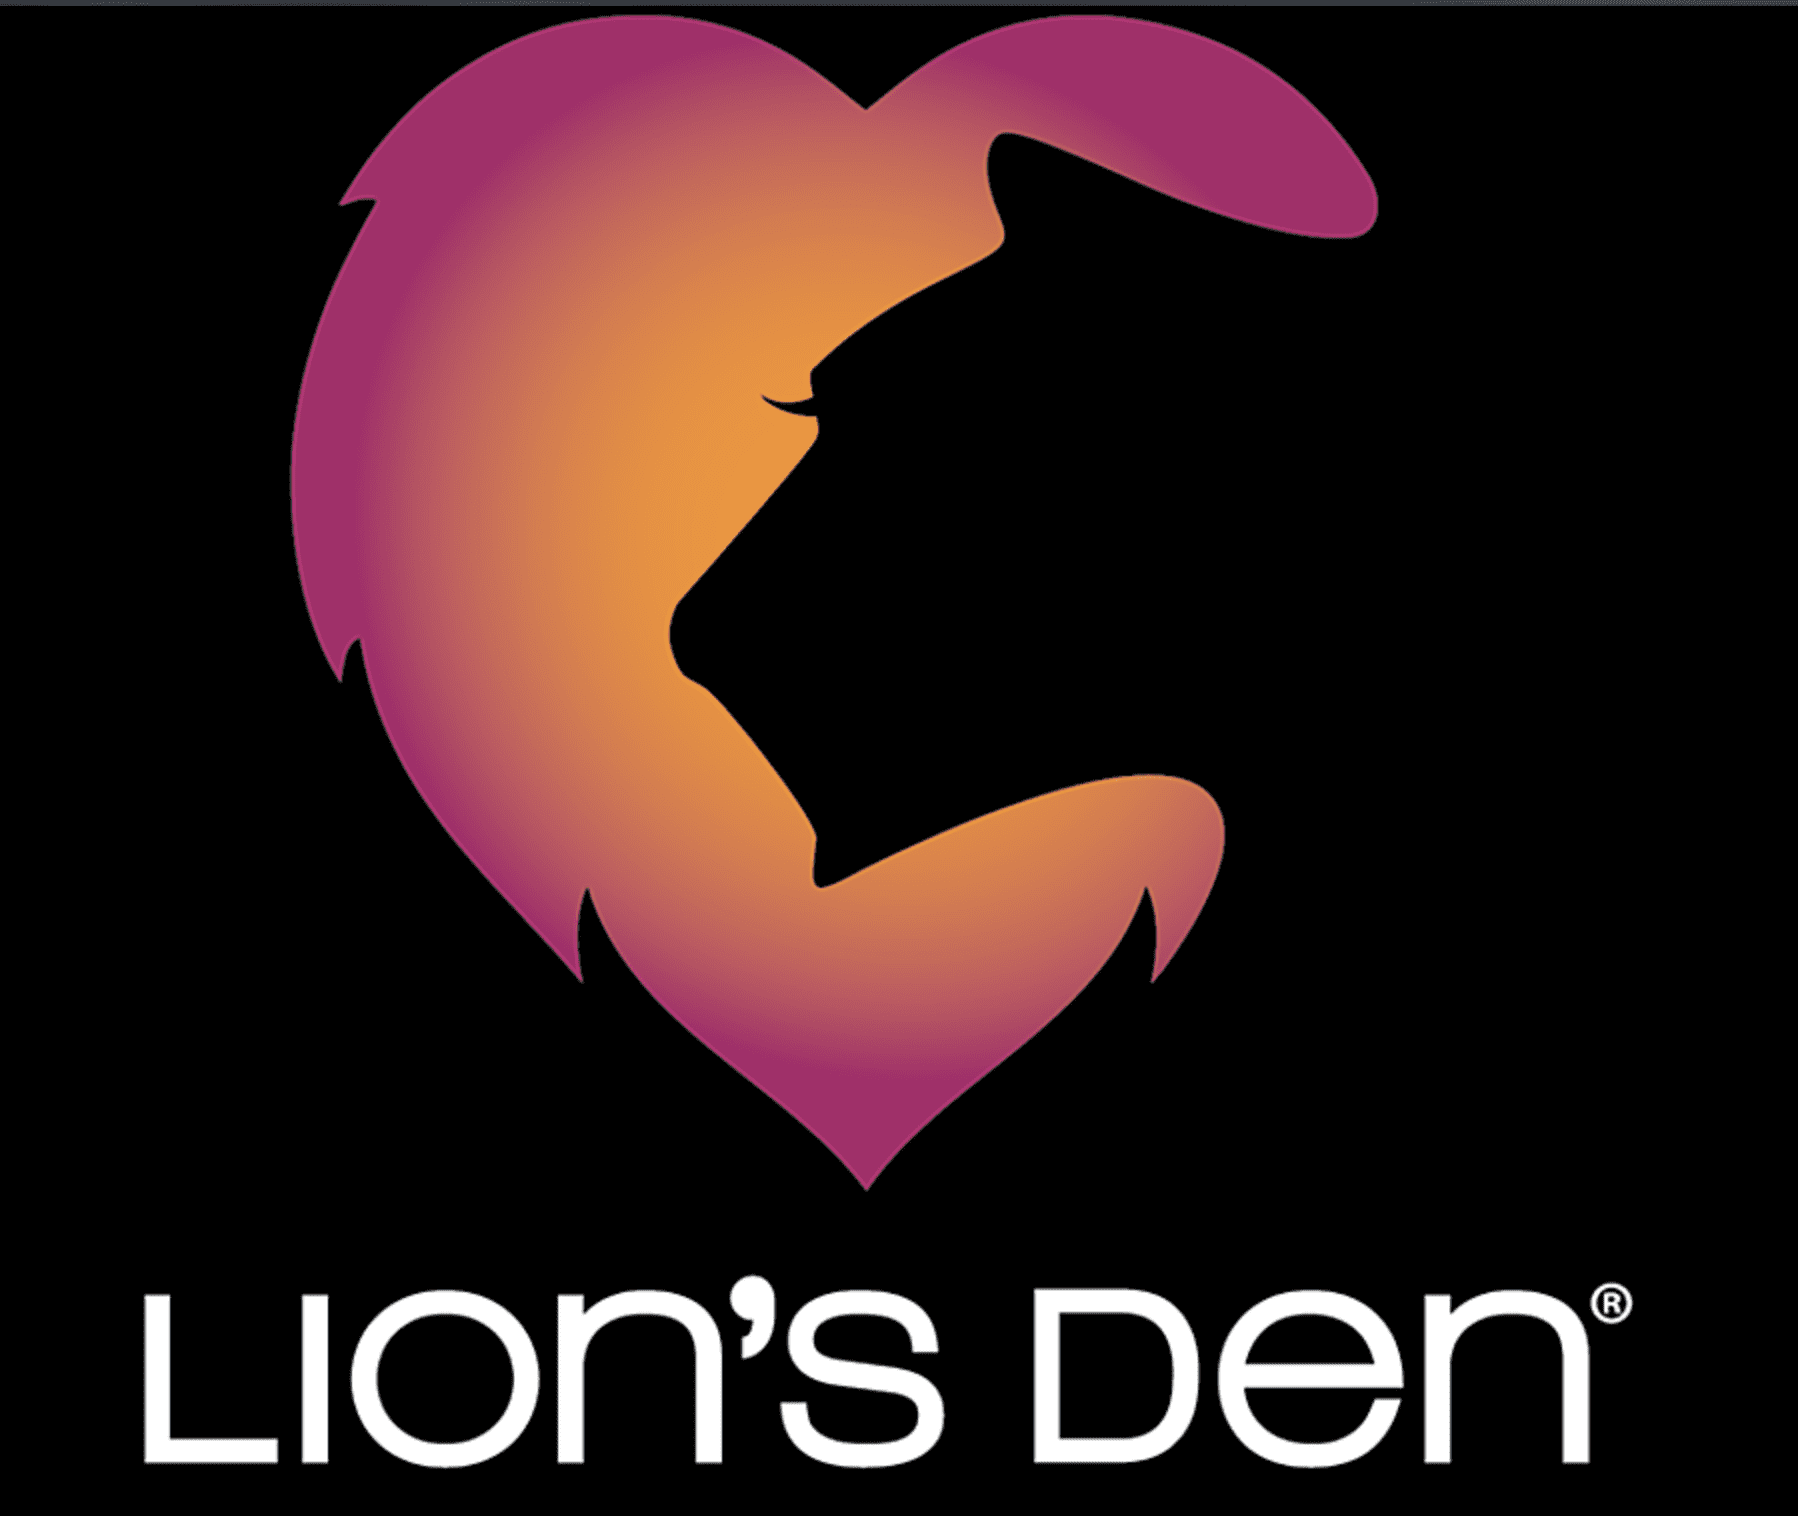 Heart shaped lion logo for Lions Den